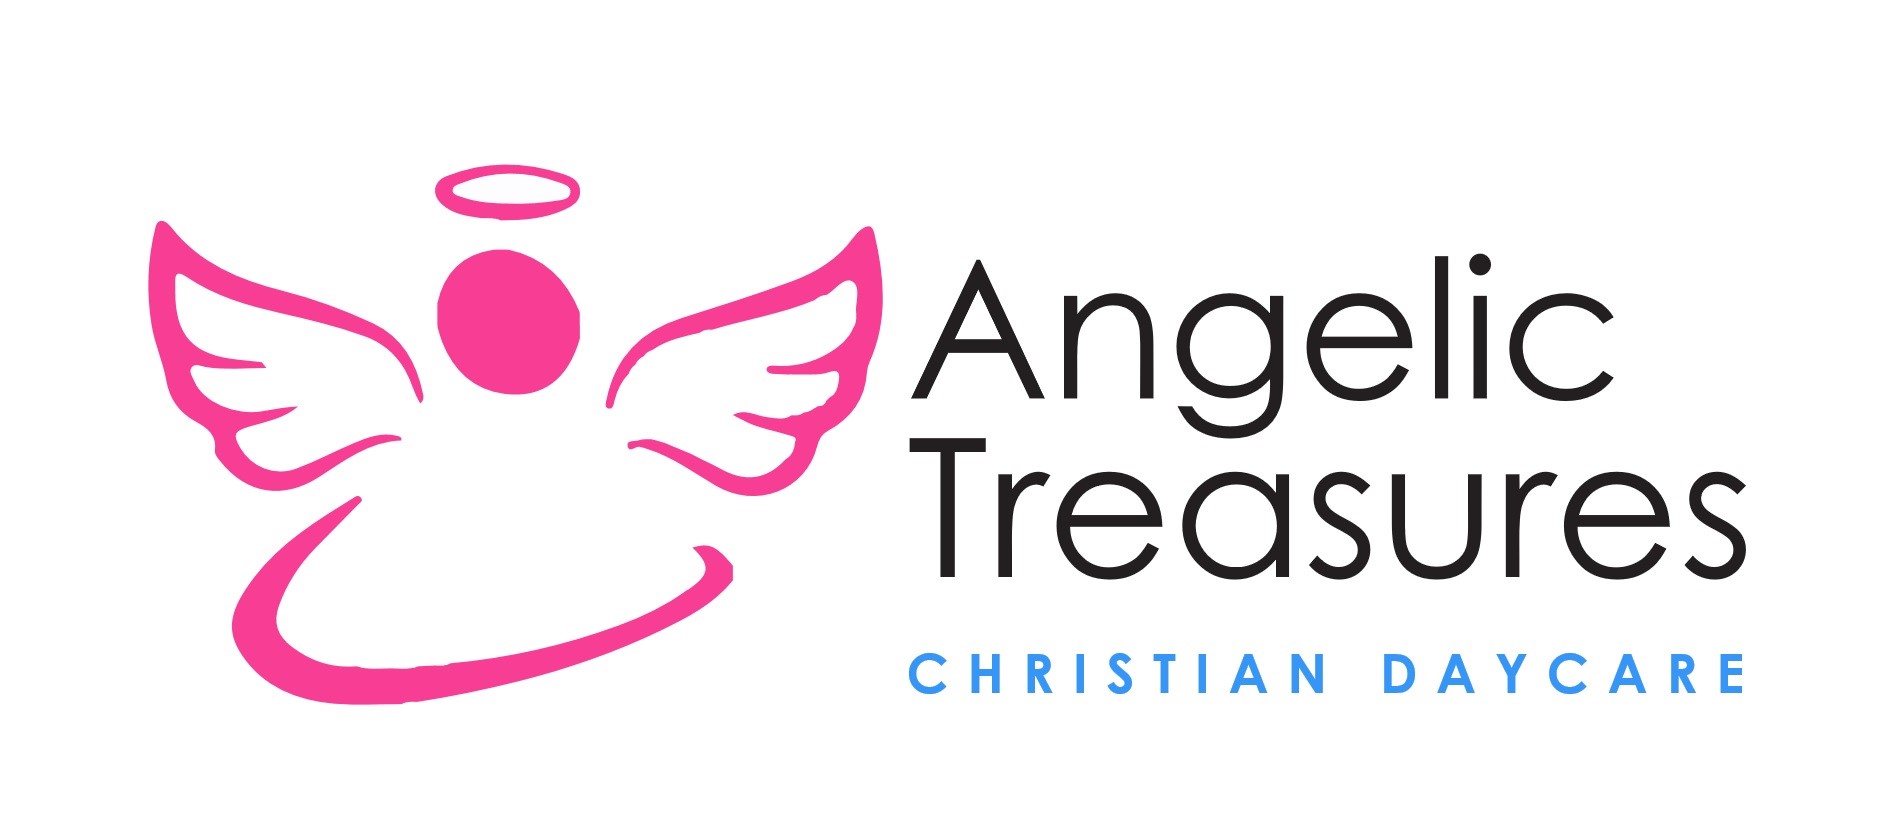 Angelic Treasures Christian Daycare